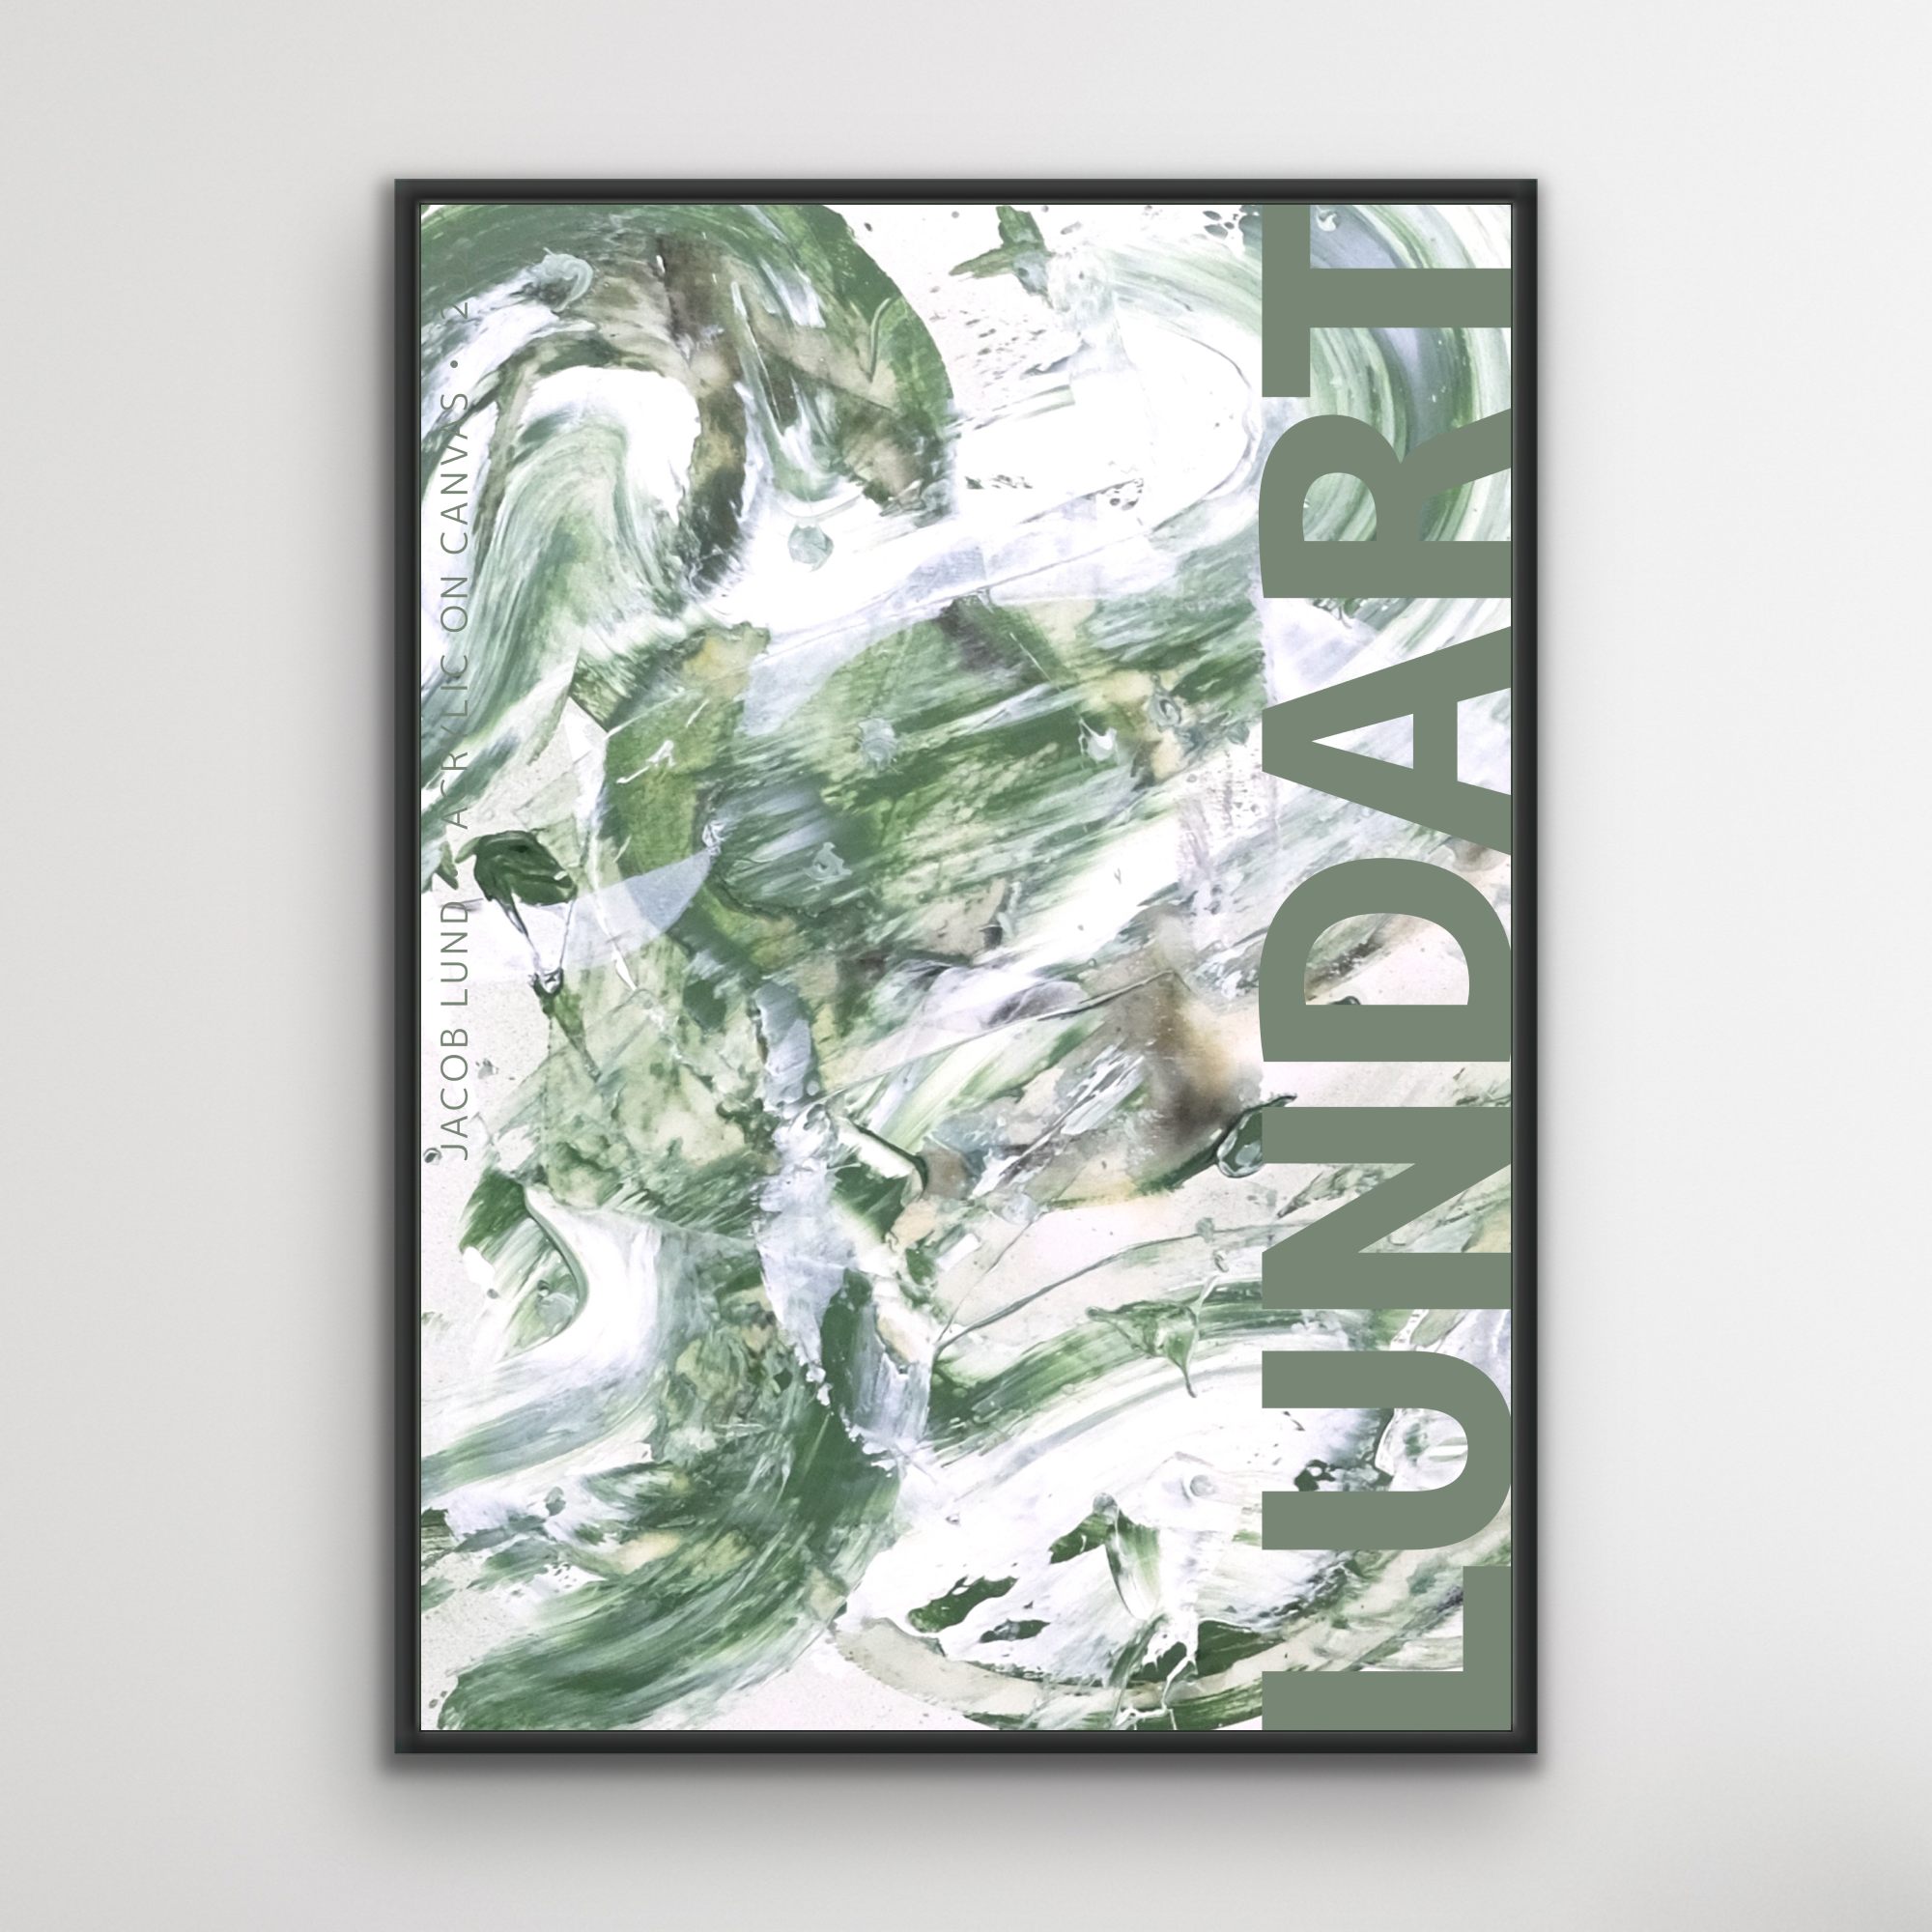 Poster: "Green Road - LUNDART"